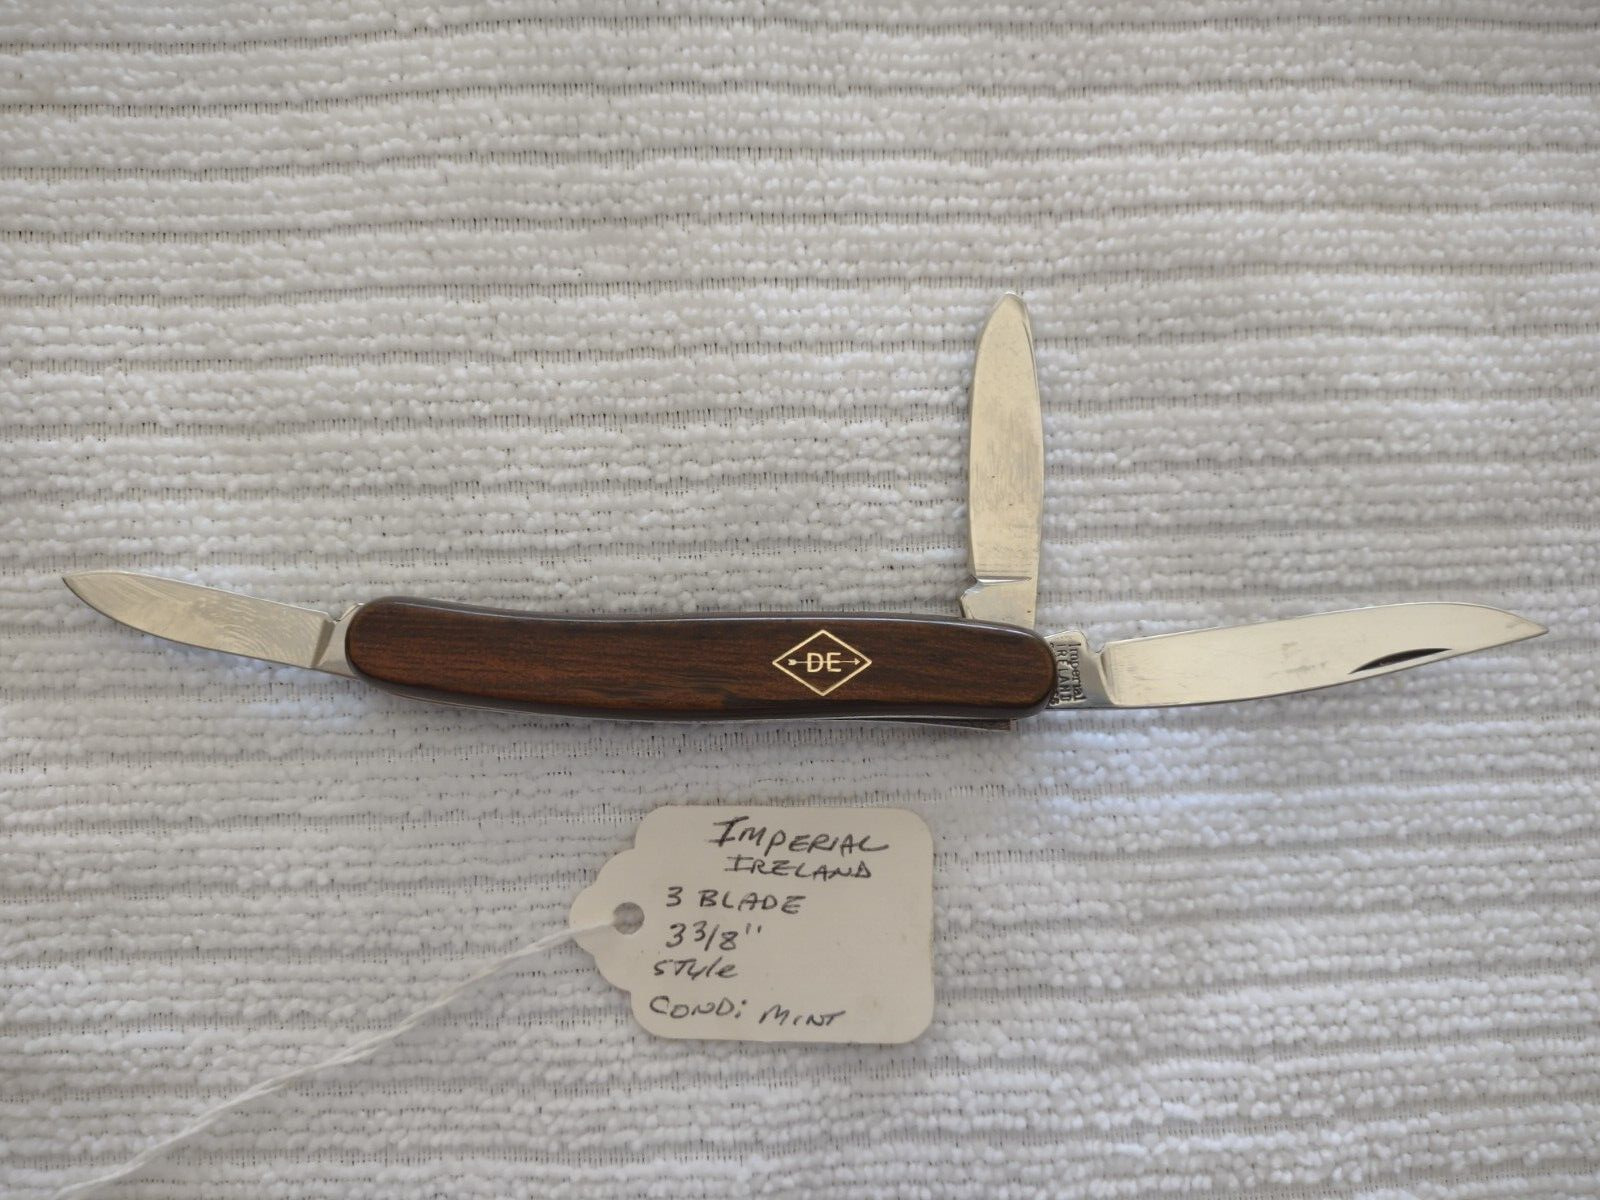 Vintage IMPERIAL IRELAND DE Diamond Edge 3 Blade Whittler Pocket Knife